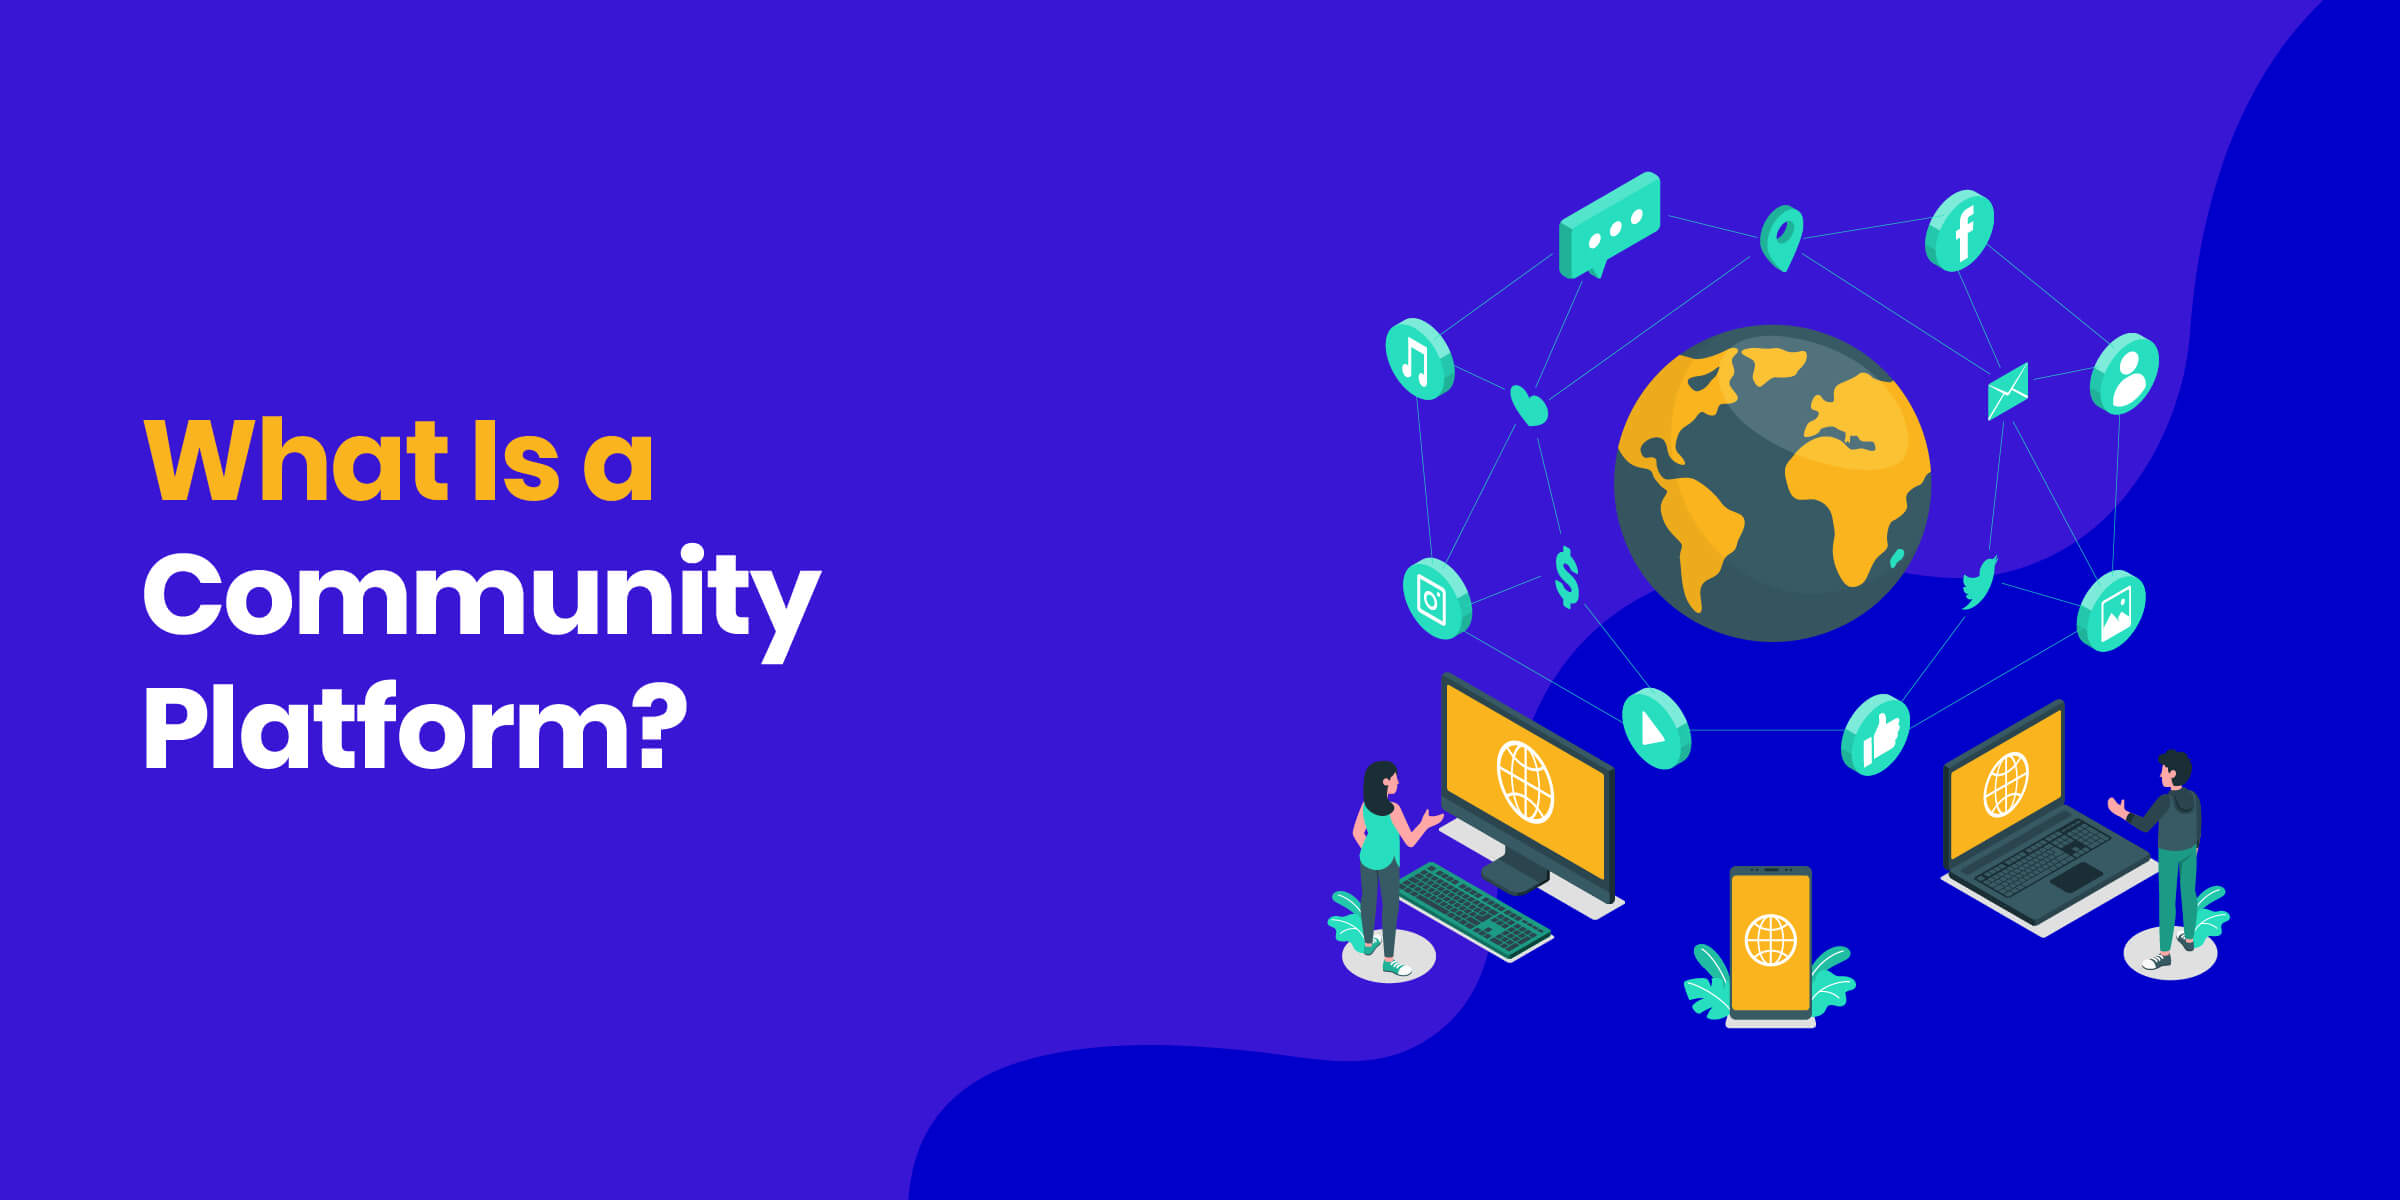 What Is a Community Platform